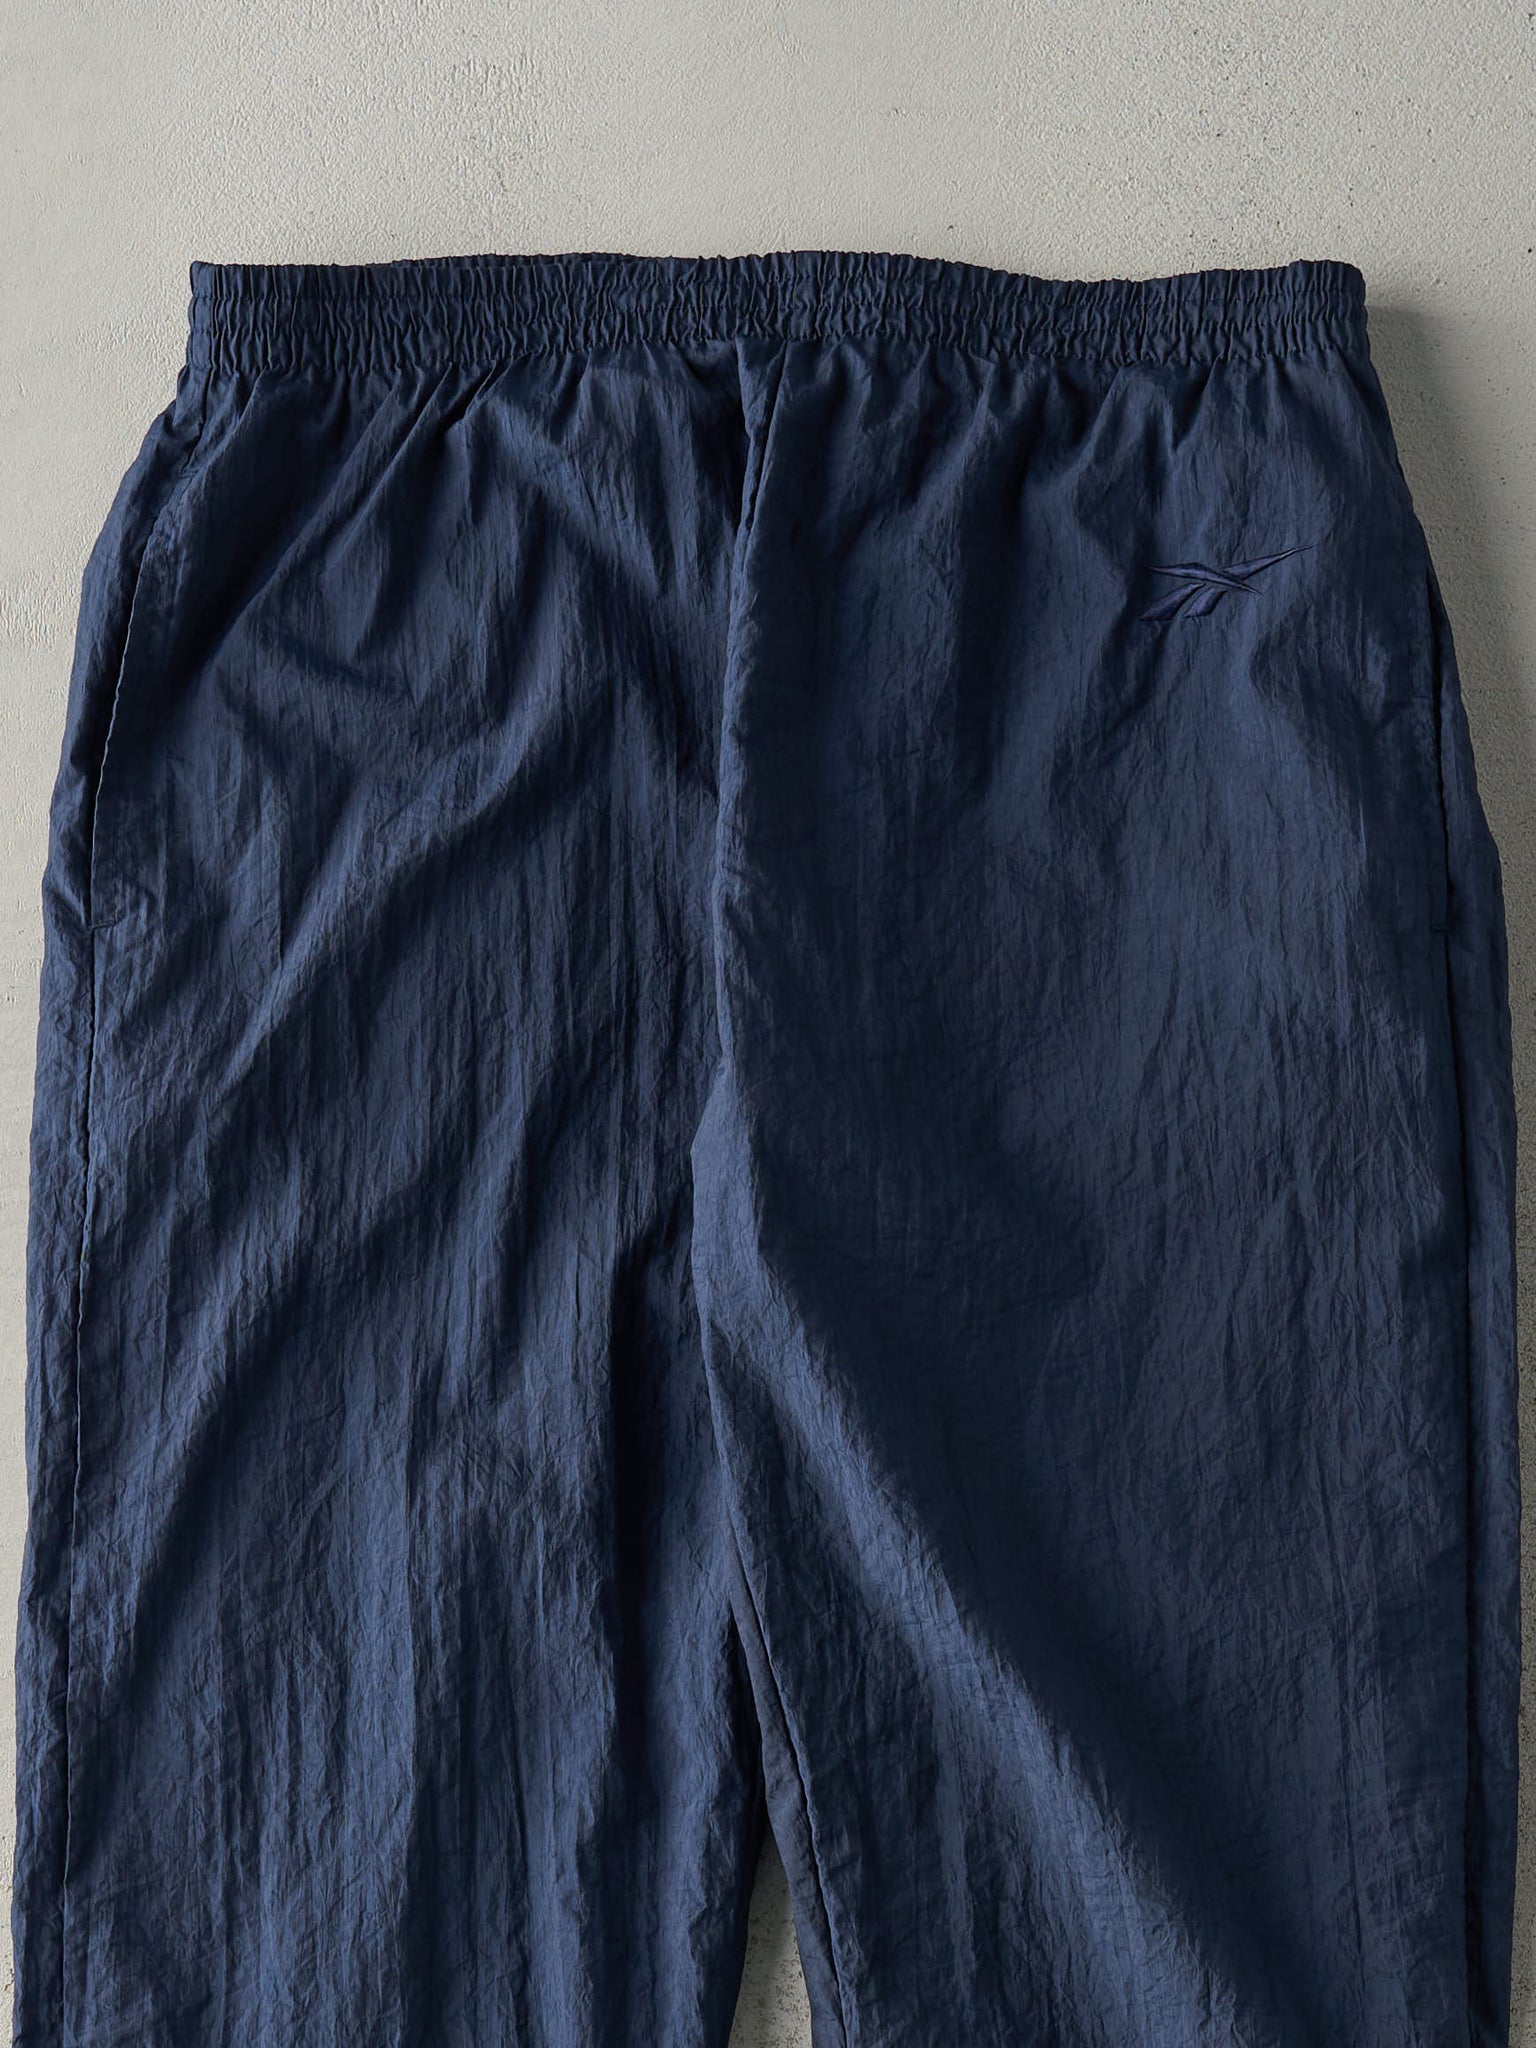 Vintage 90s Navy Blue Embroidered Reebok Track Pants (35x32)